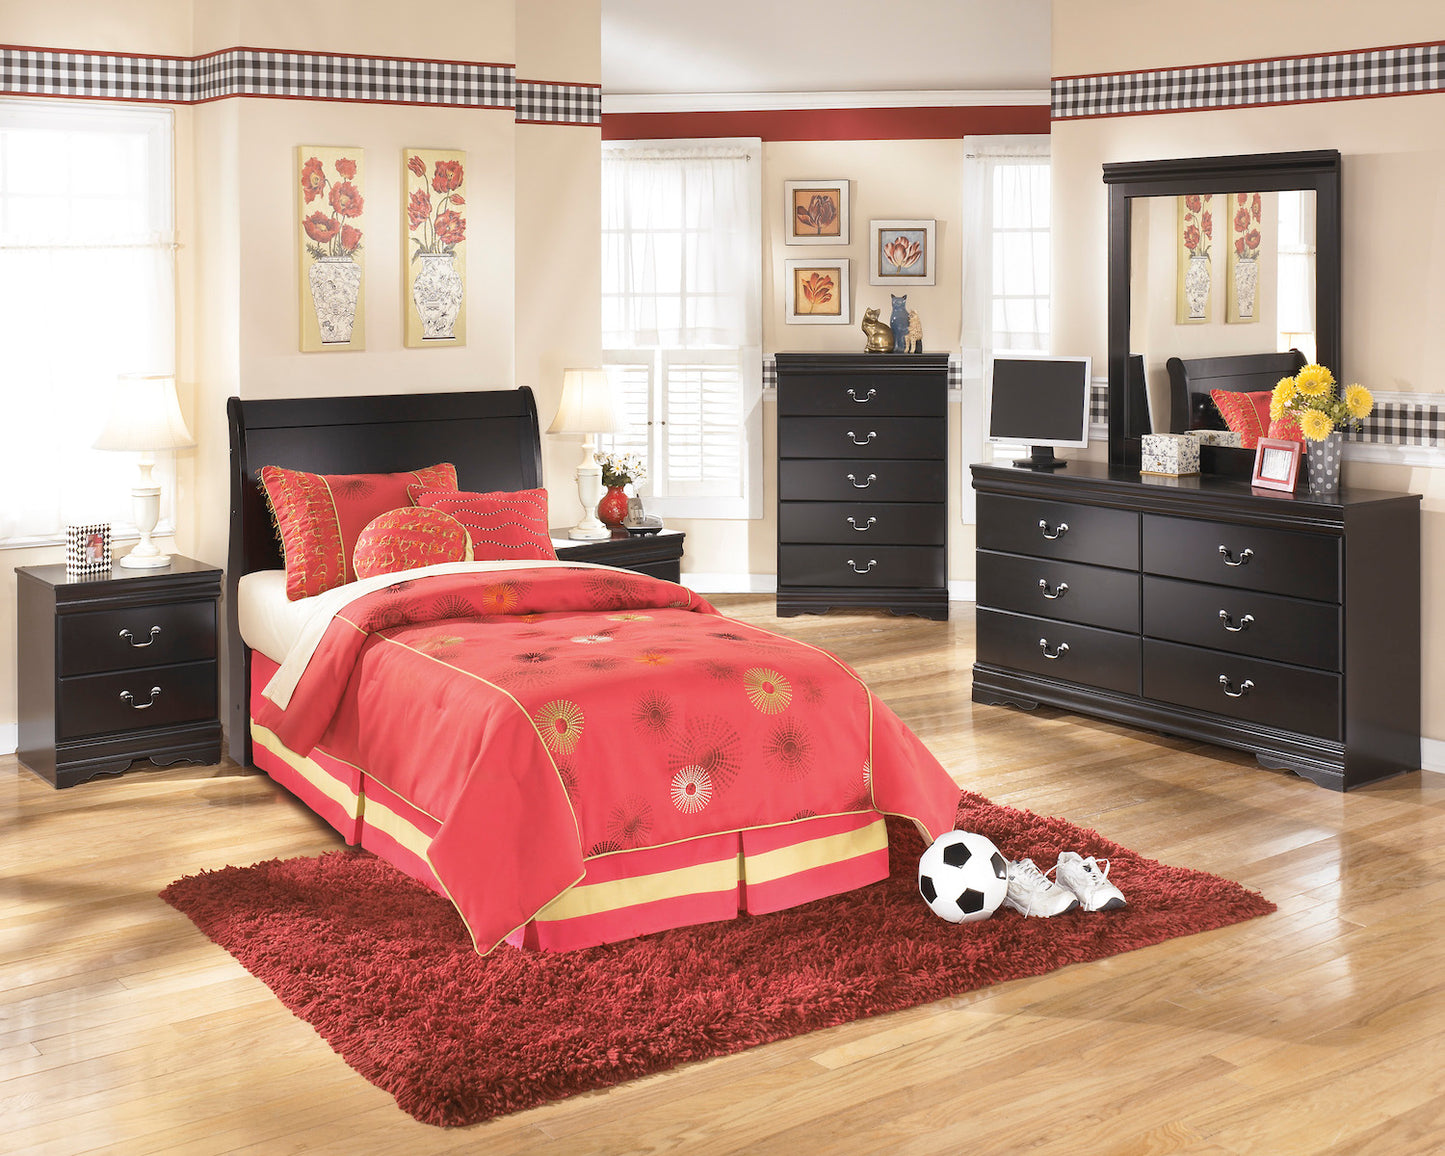 Ashley Huey Vineyard 5PC Full Sleigh Headboard Bedroom Set With Two Nightstands In Black